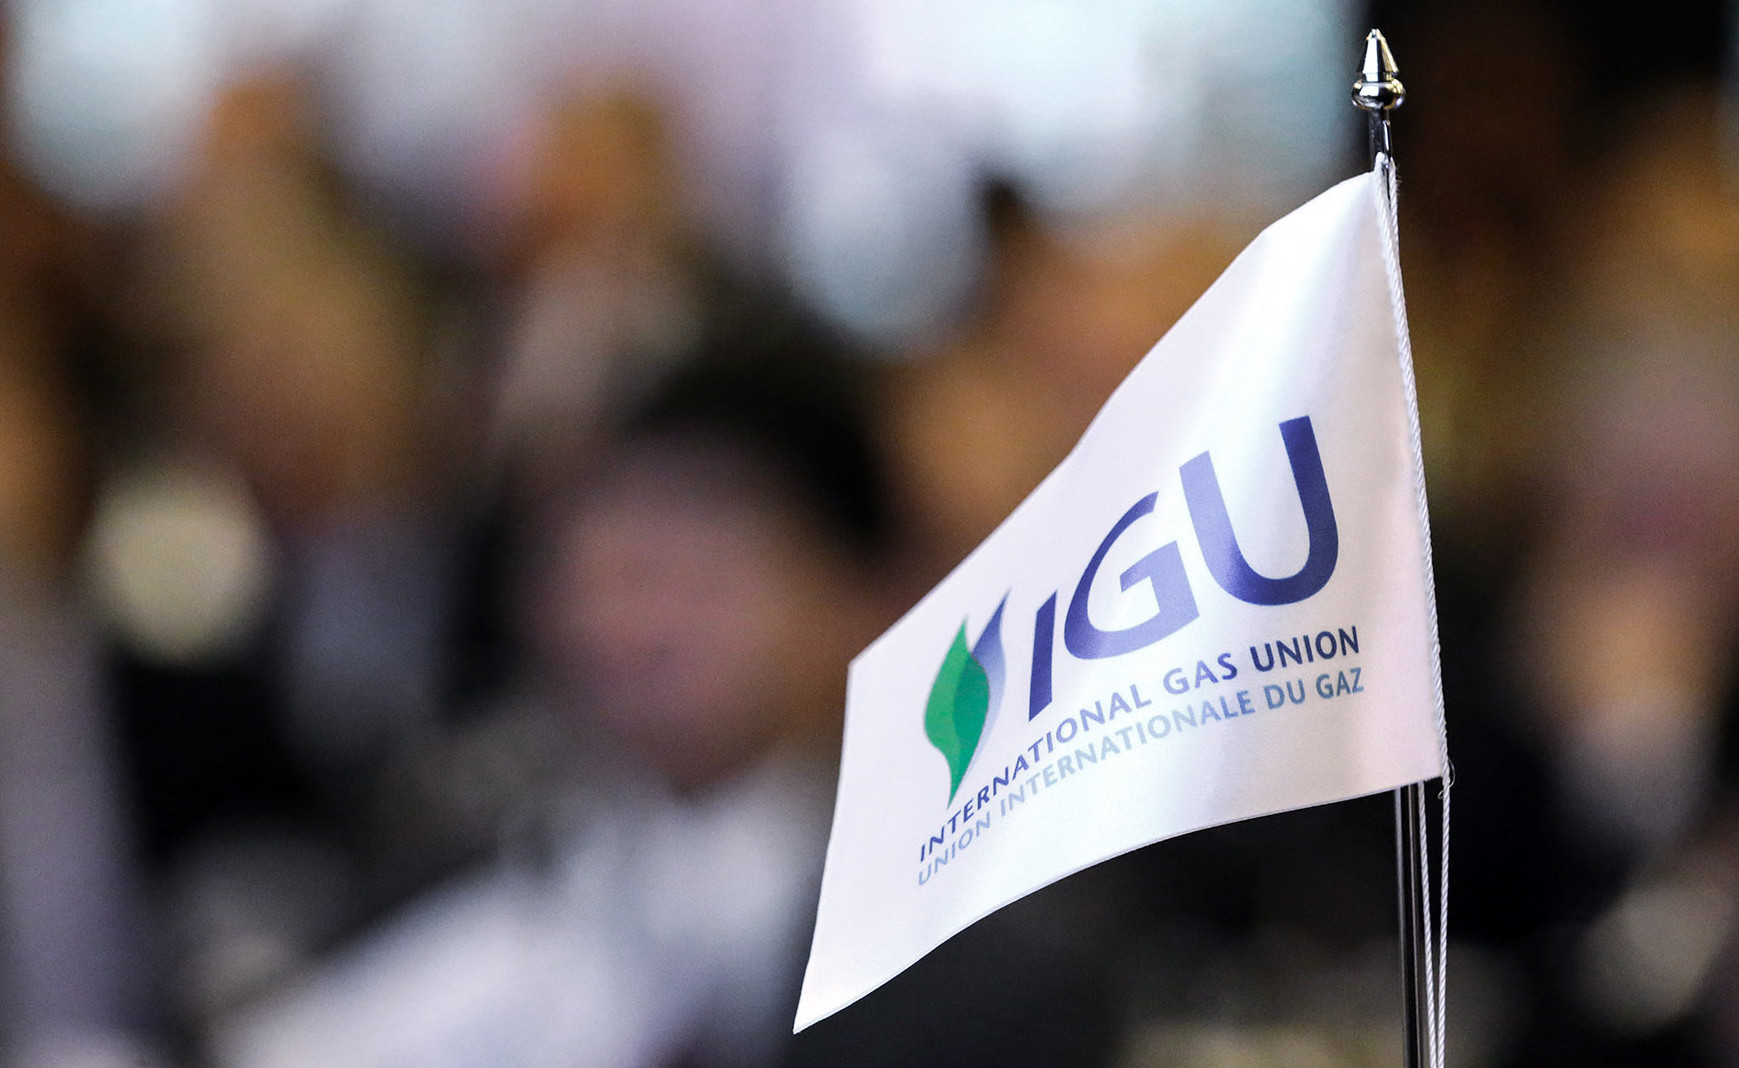 IGU – International Gas Union